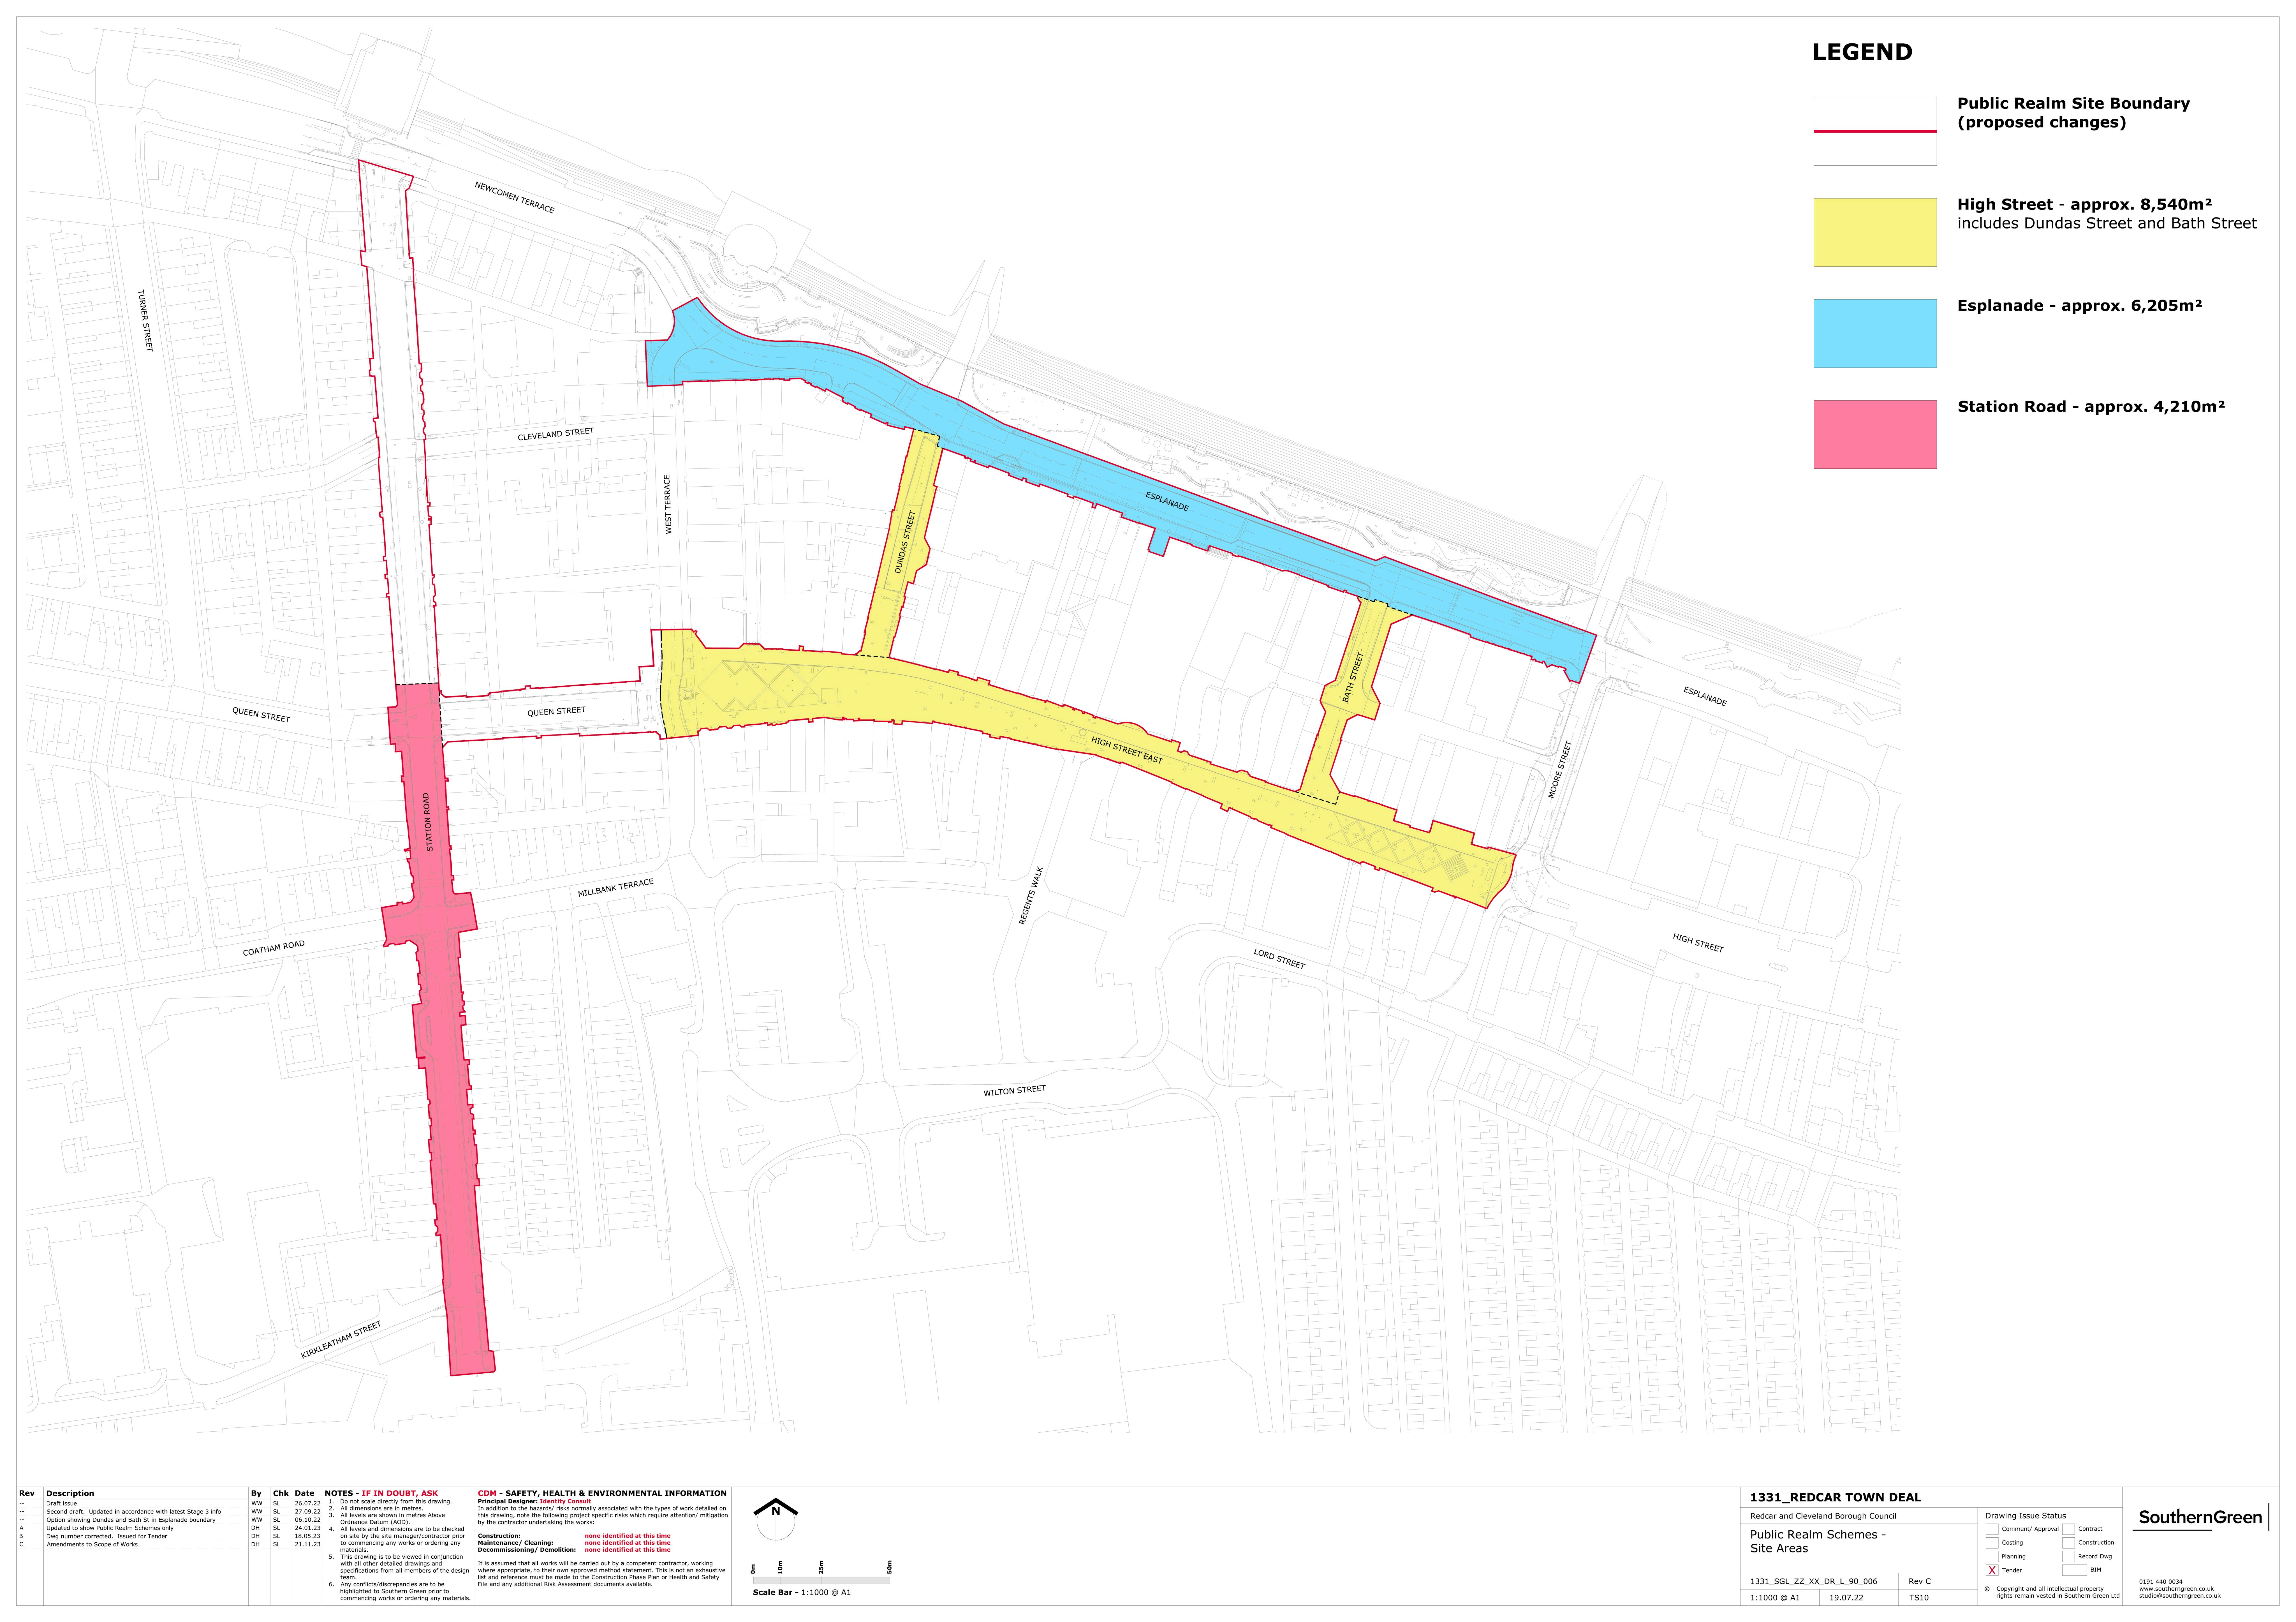 Location of Town Centre Improvements (Dec. 23)